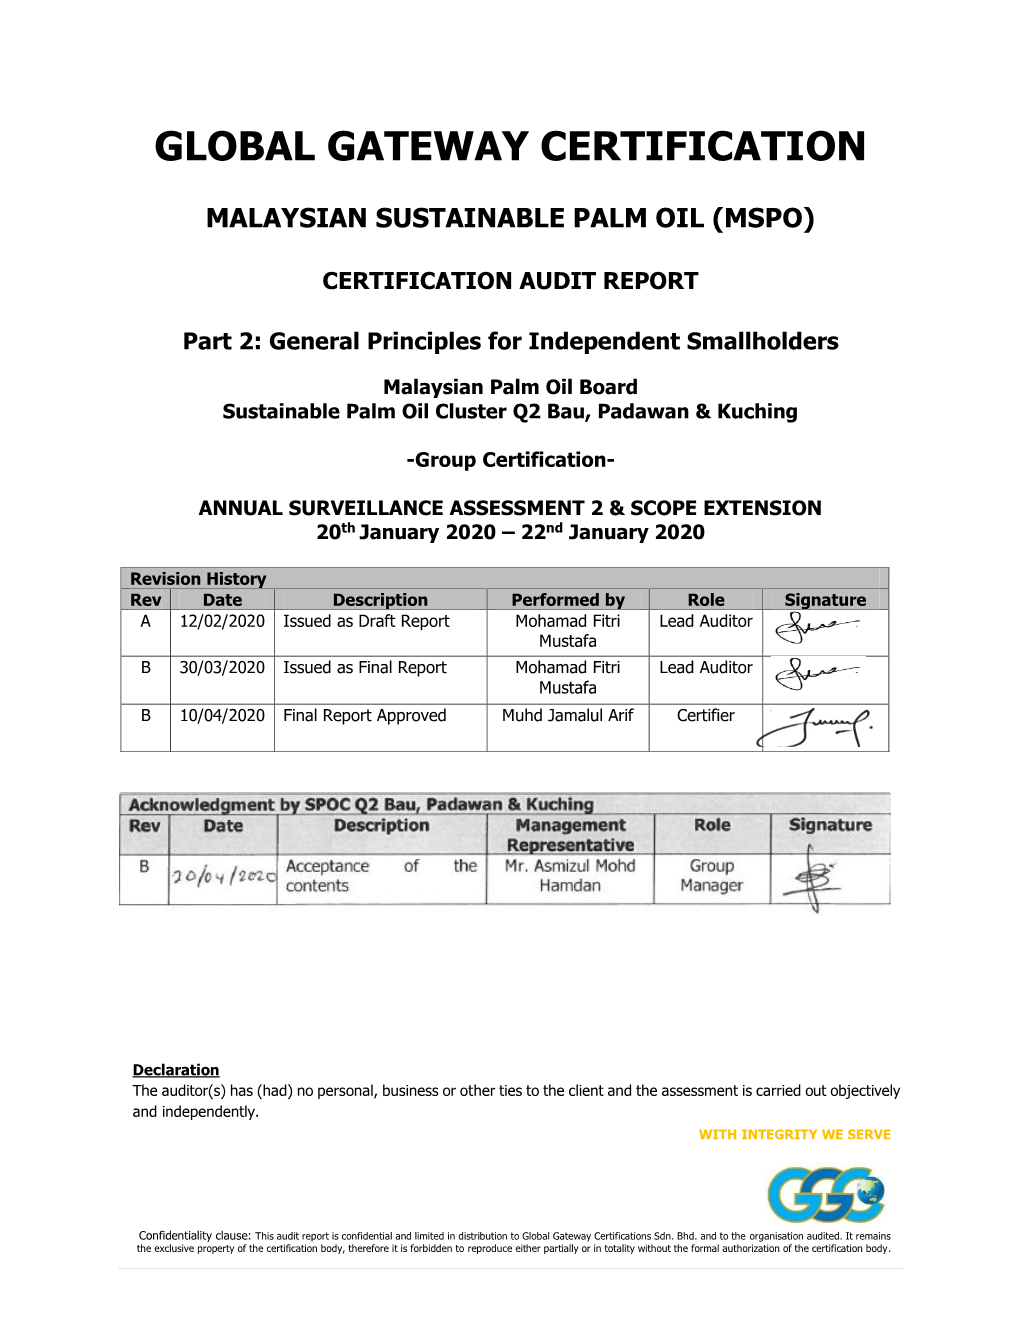 Global Gateway Certifications Sdn Bhd (GGC)